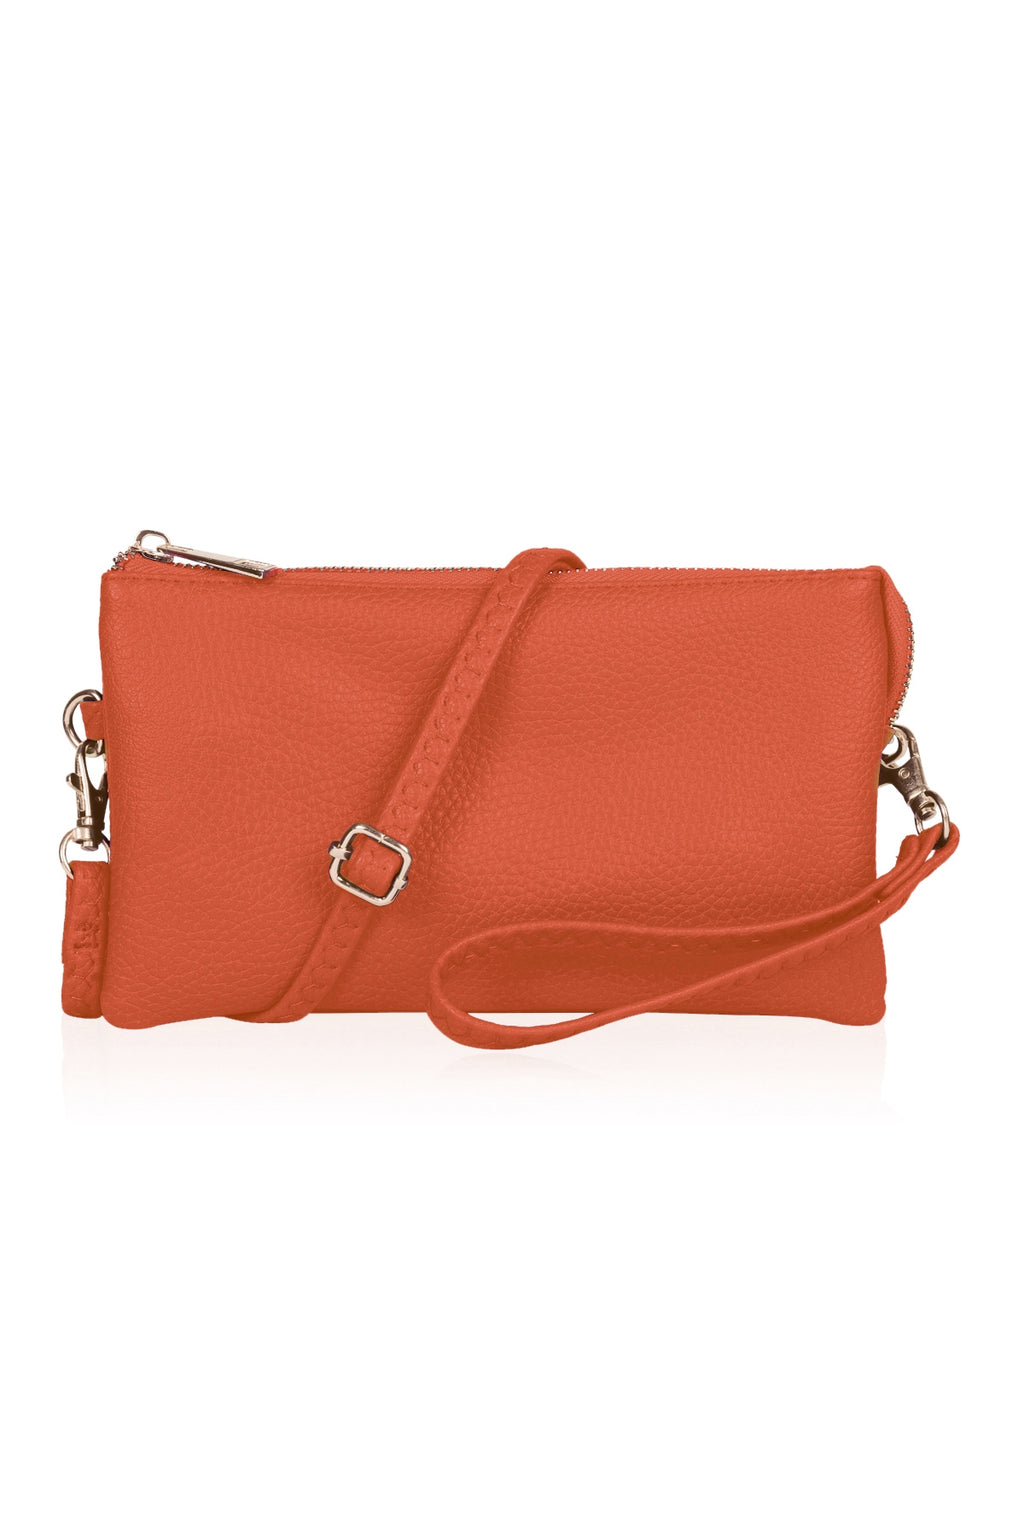 Wholesale Tassel Flap Retro Crossbody Bag| Alibaba.com